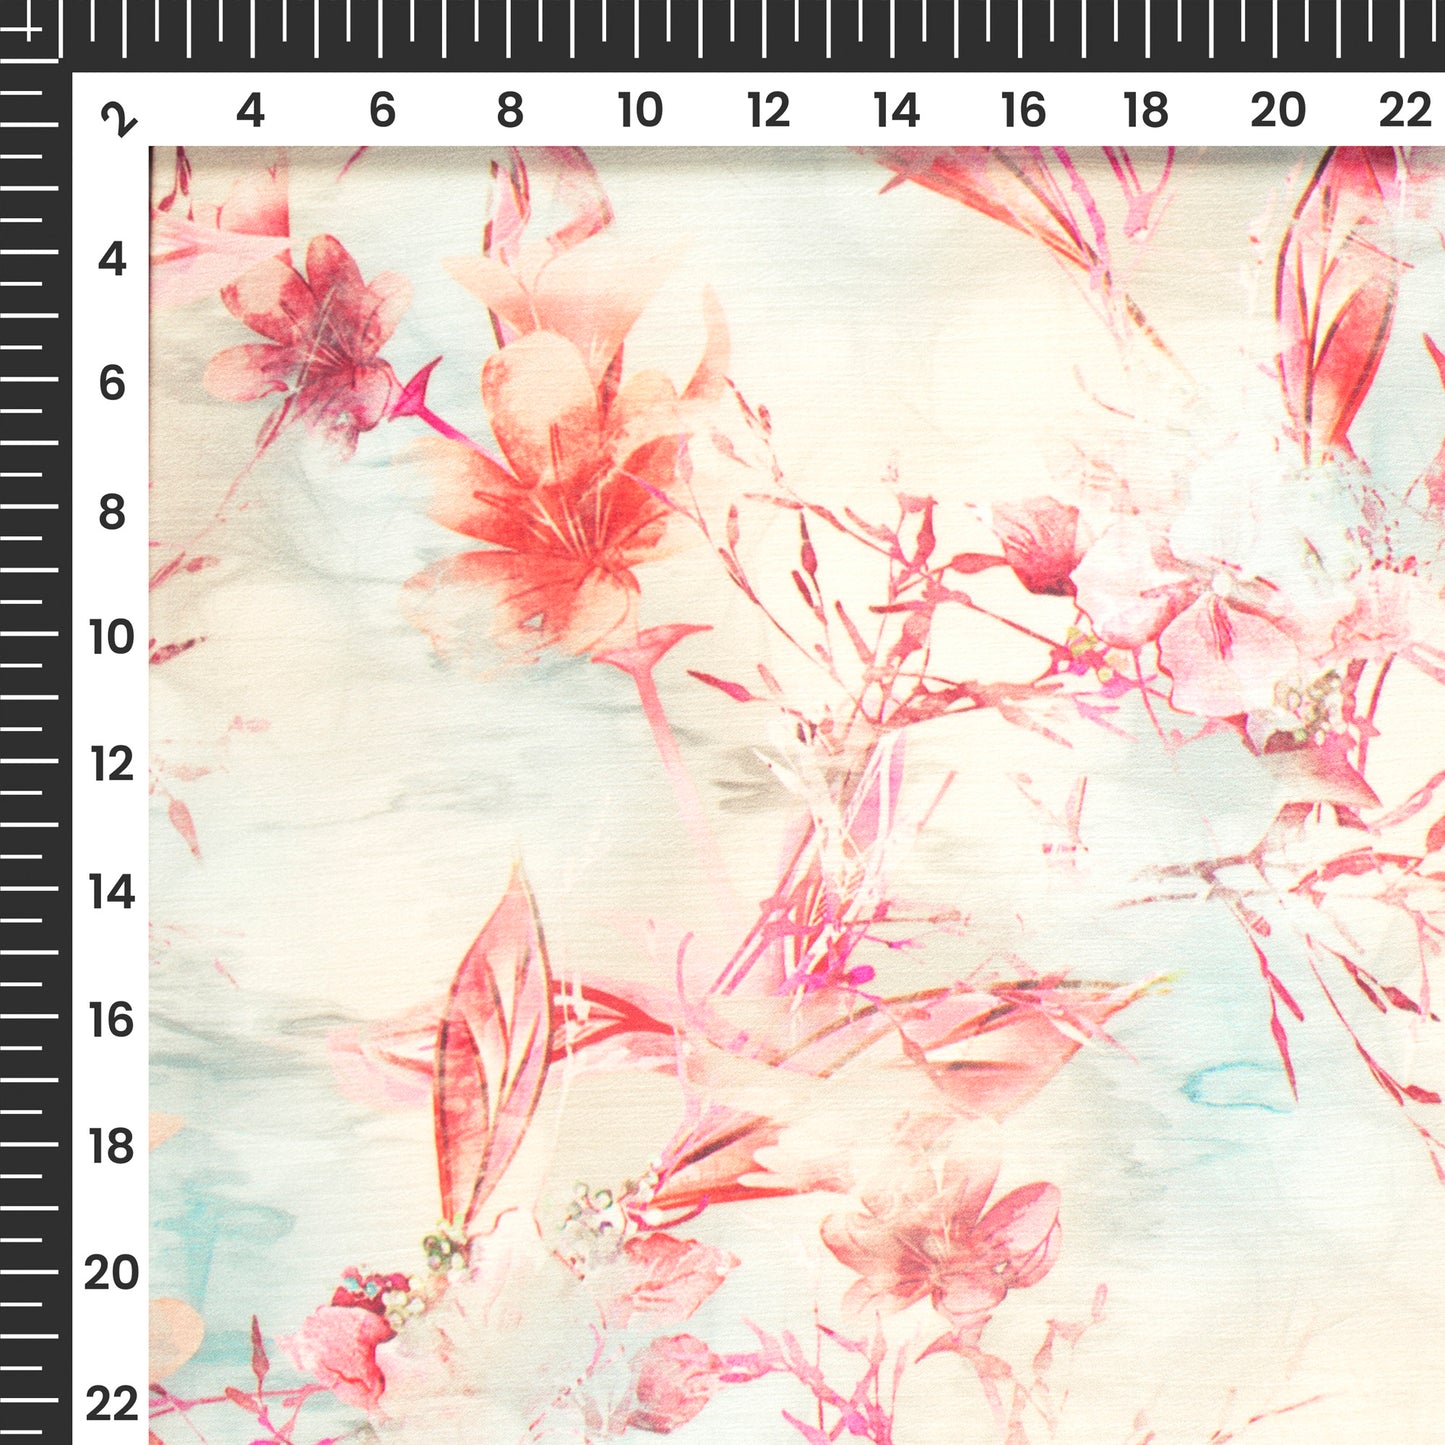 Baby Pink Floral Digital Print Chiffon Satin Fabric